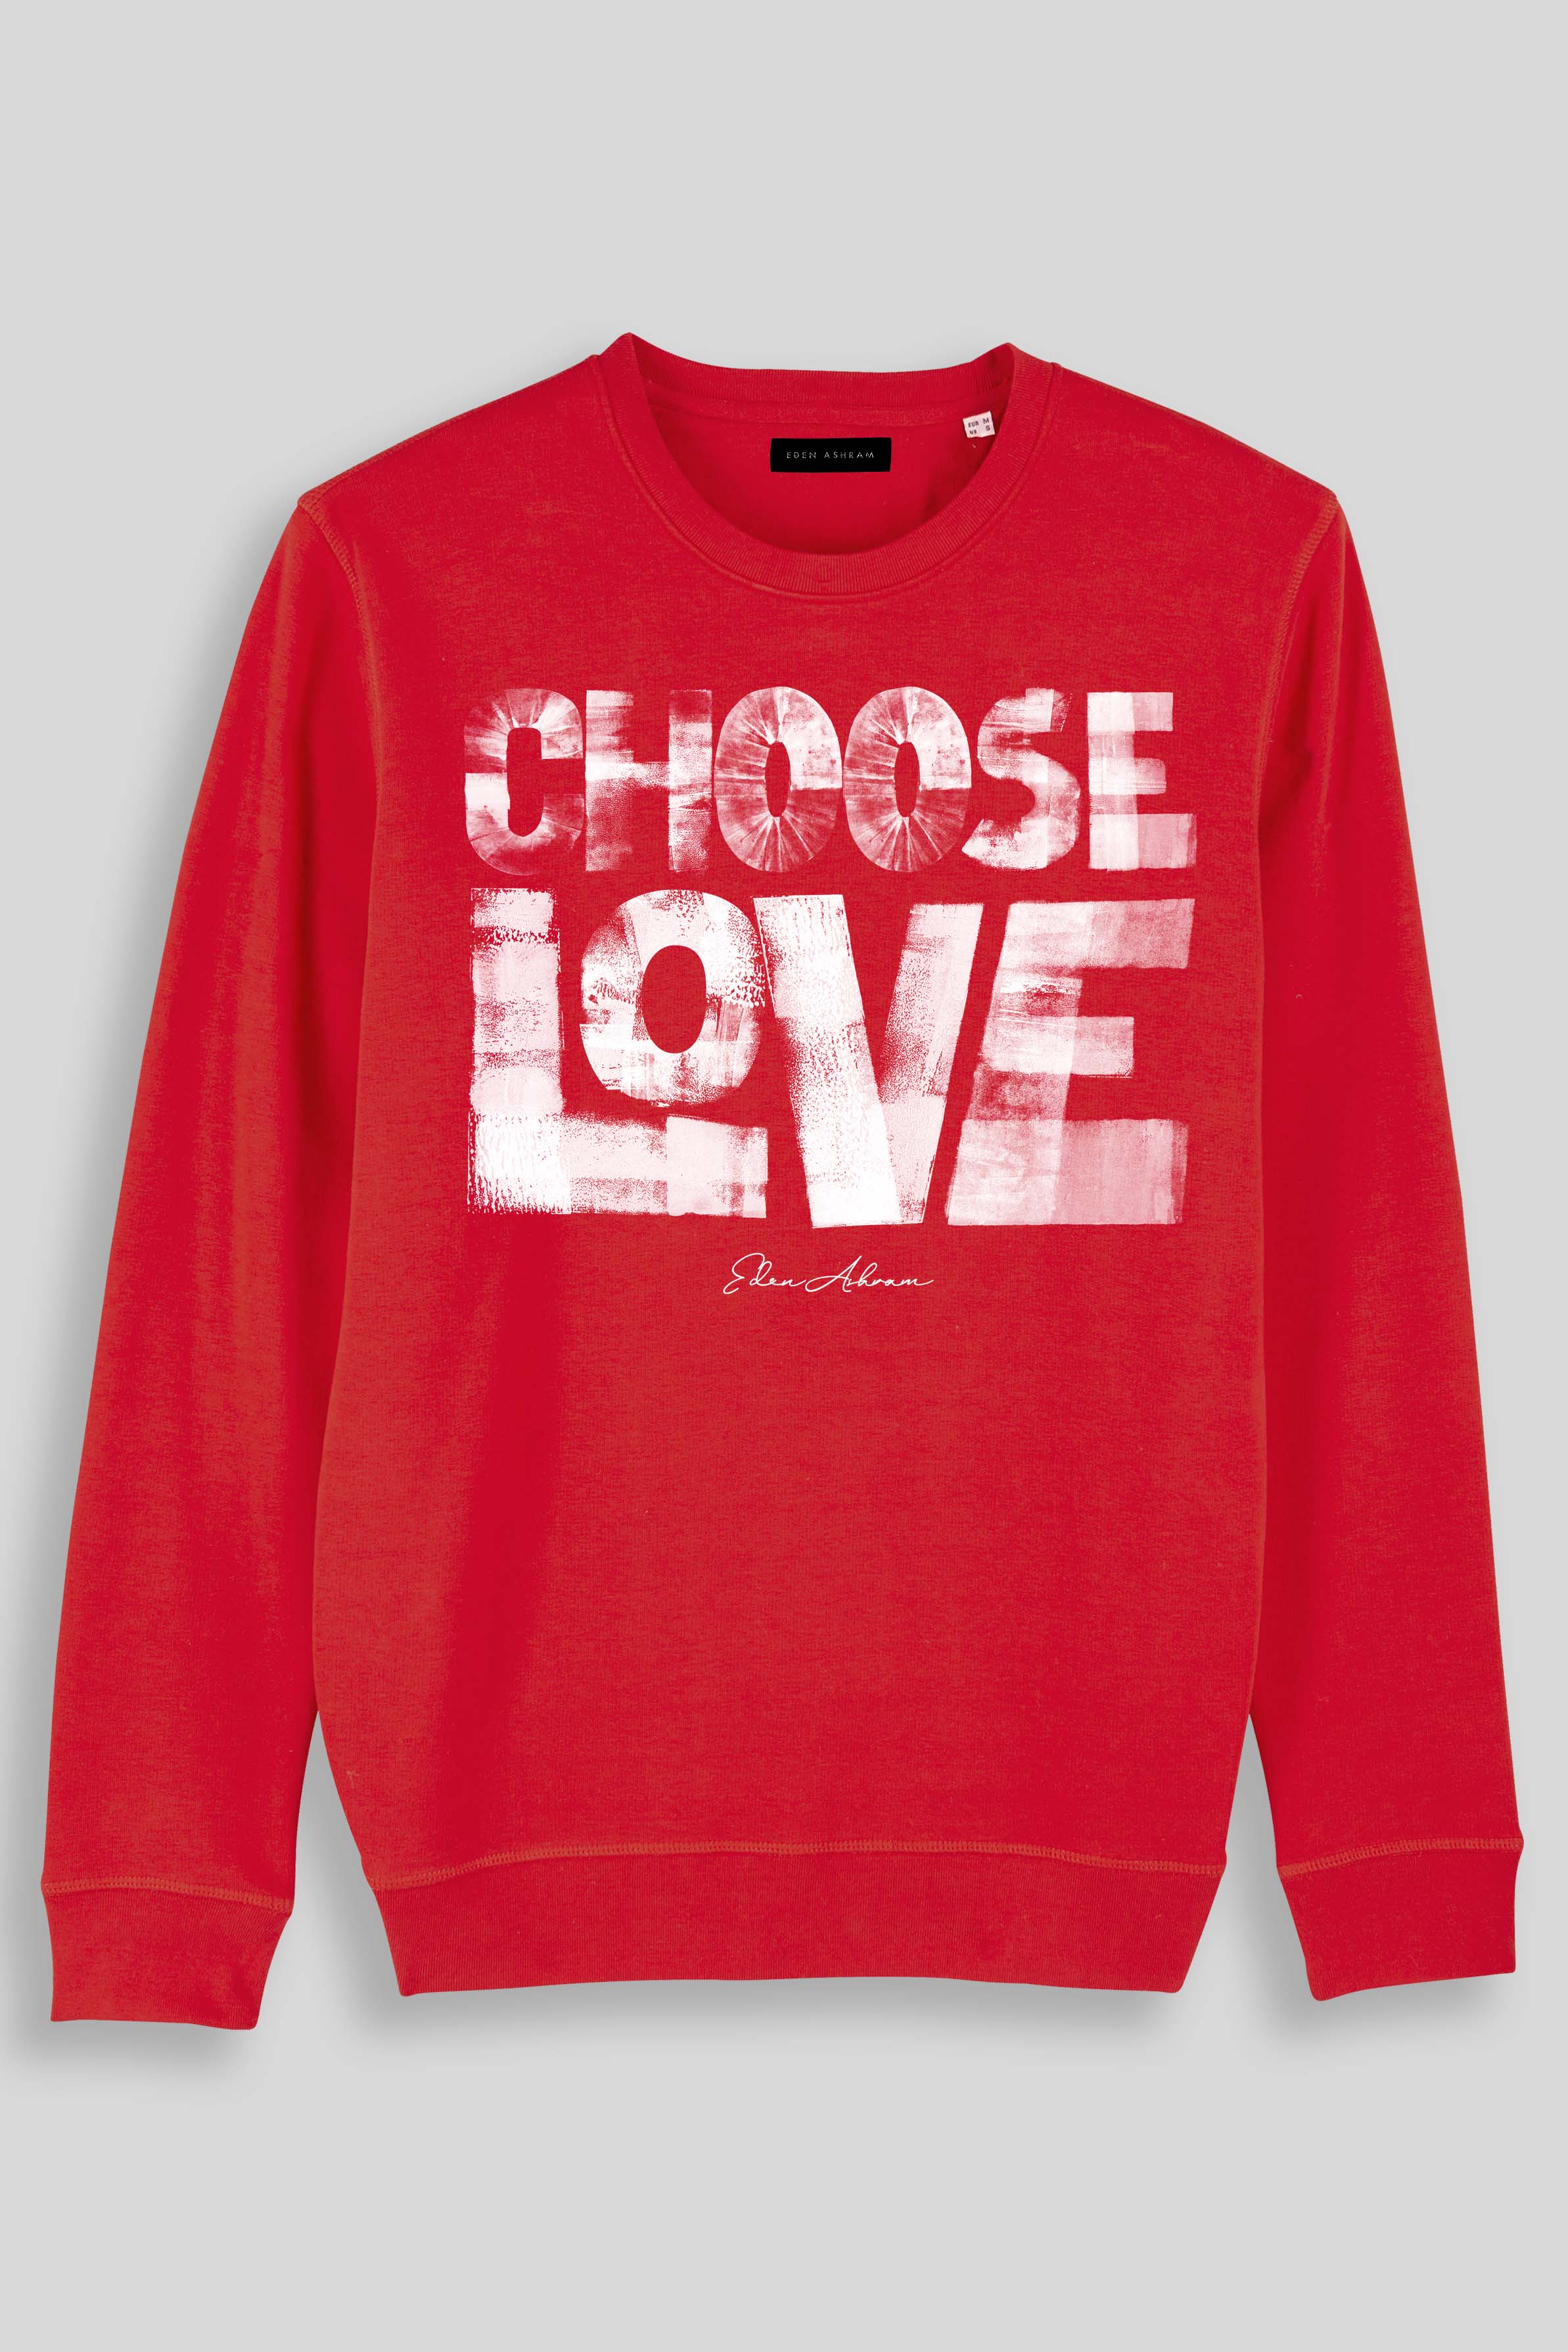 Eden Ashram Choose Love Premium Crew Neck Sweatshirt Red